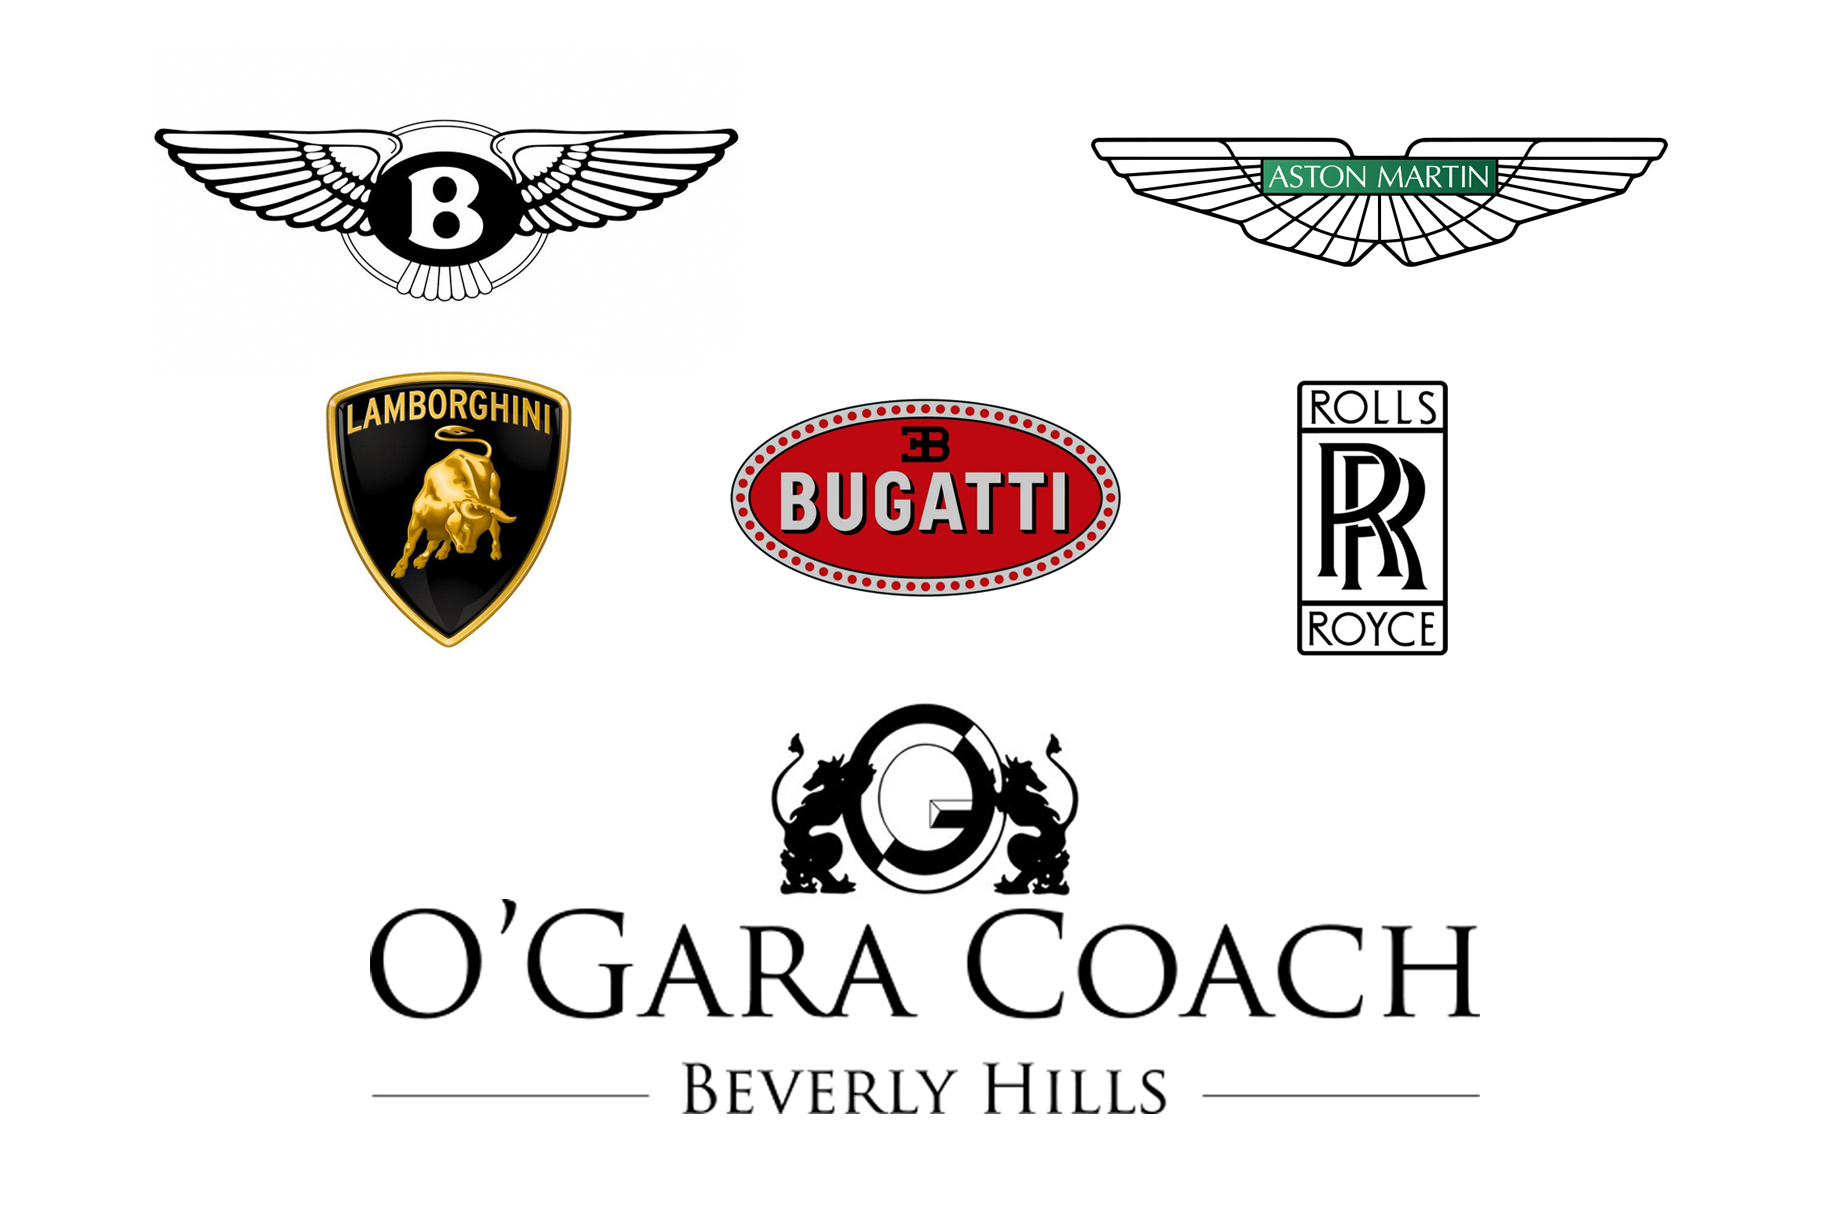 O'Gara Coach, Beverly Hills